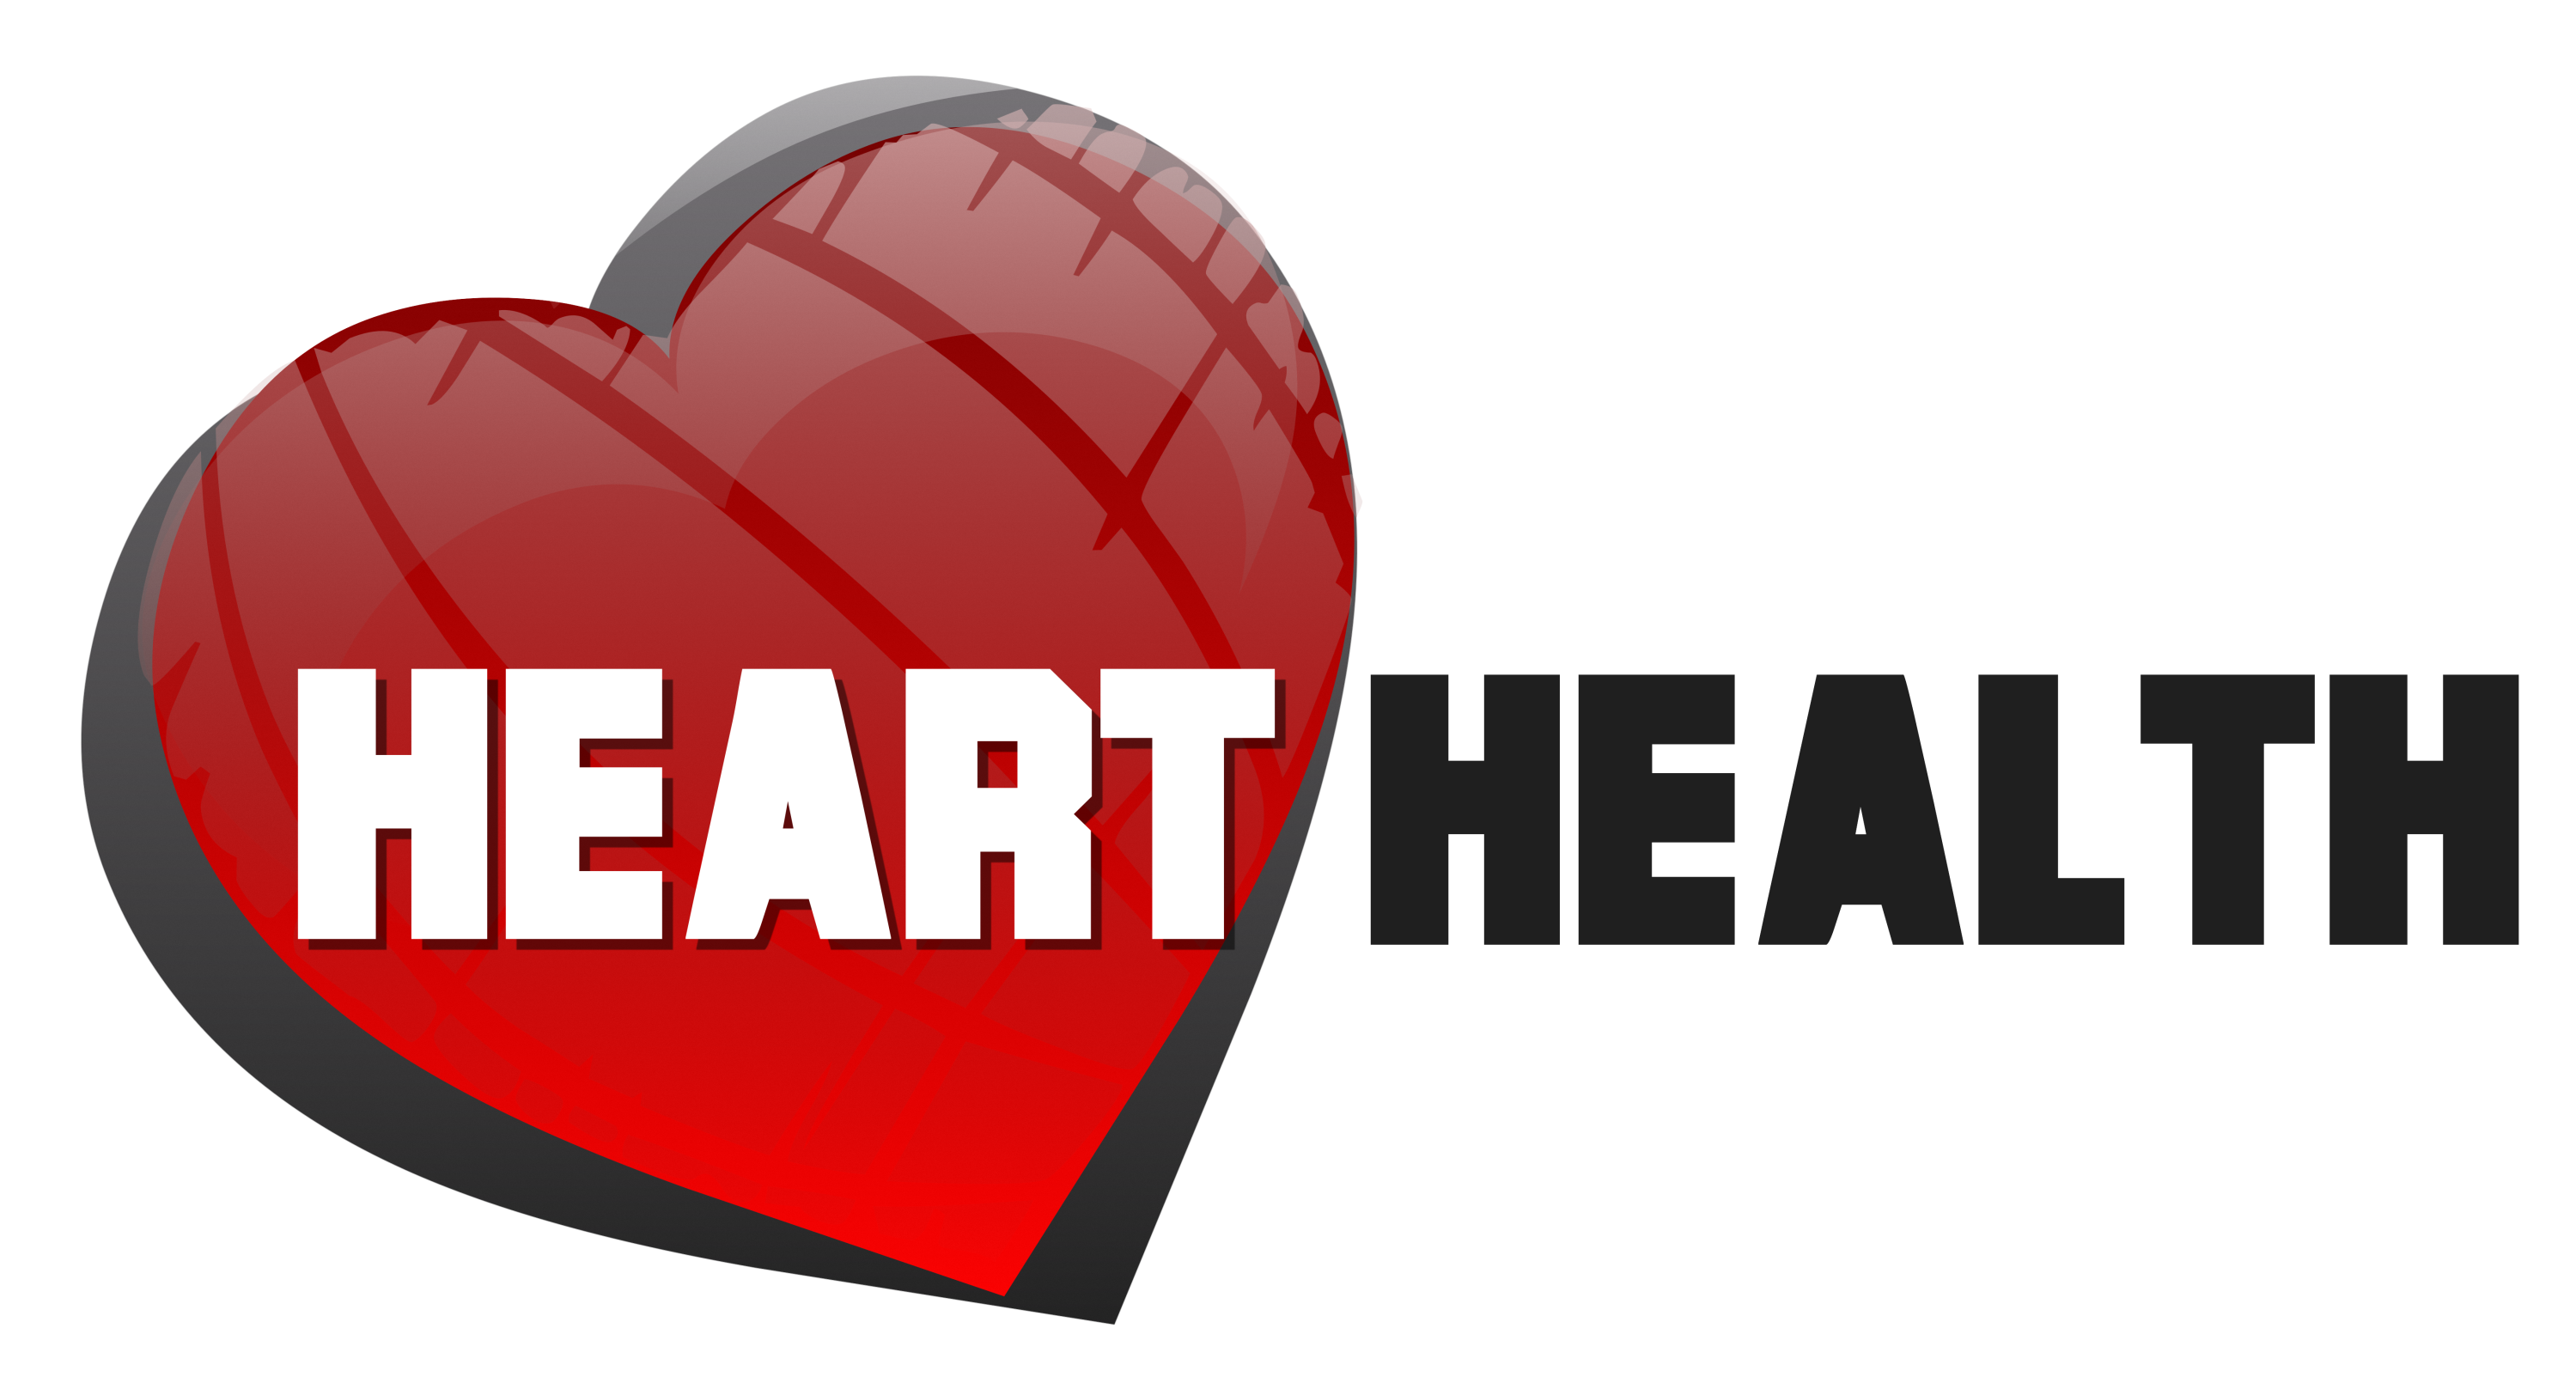 How does Heart Disease Affect Women?